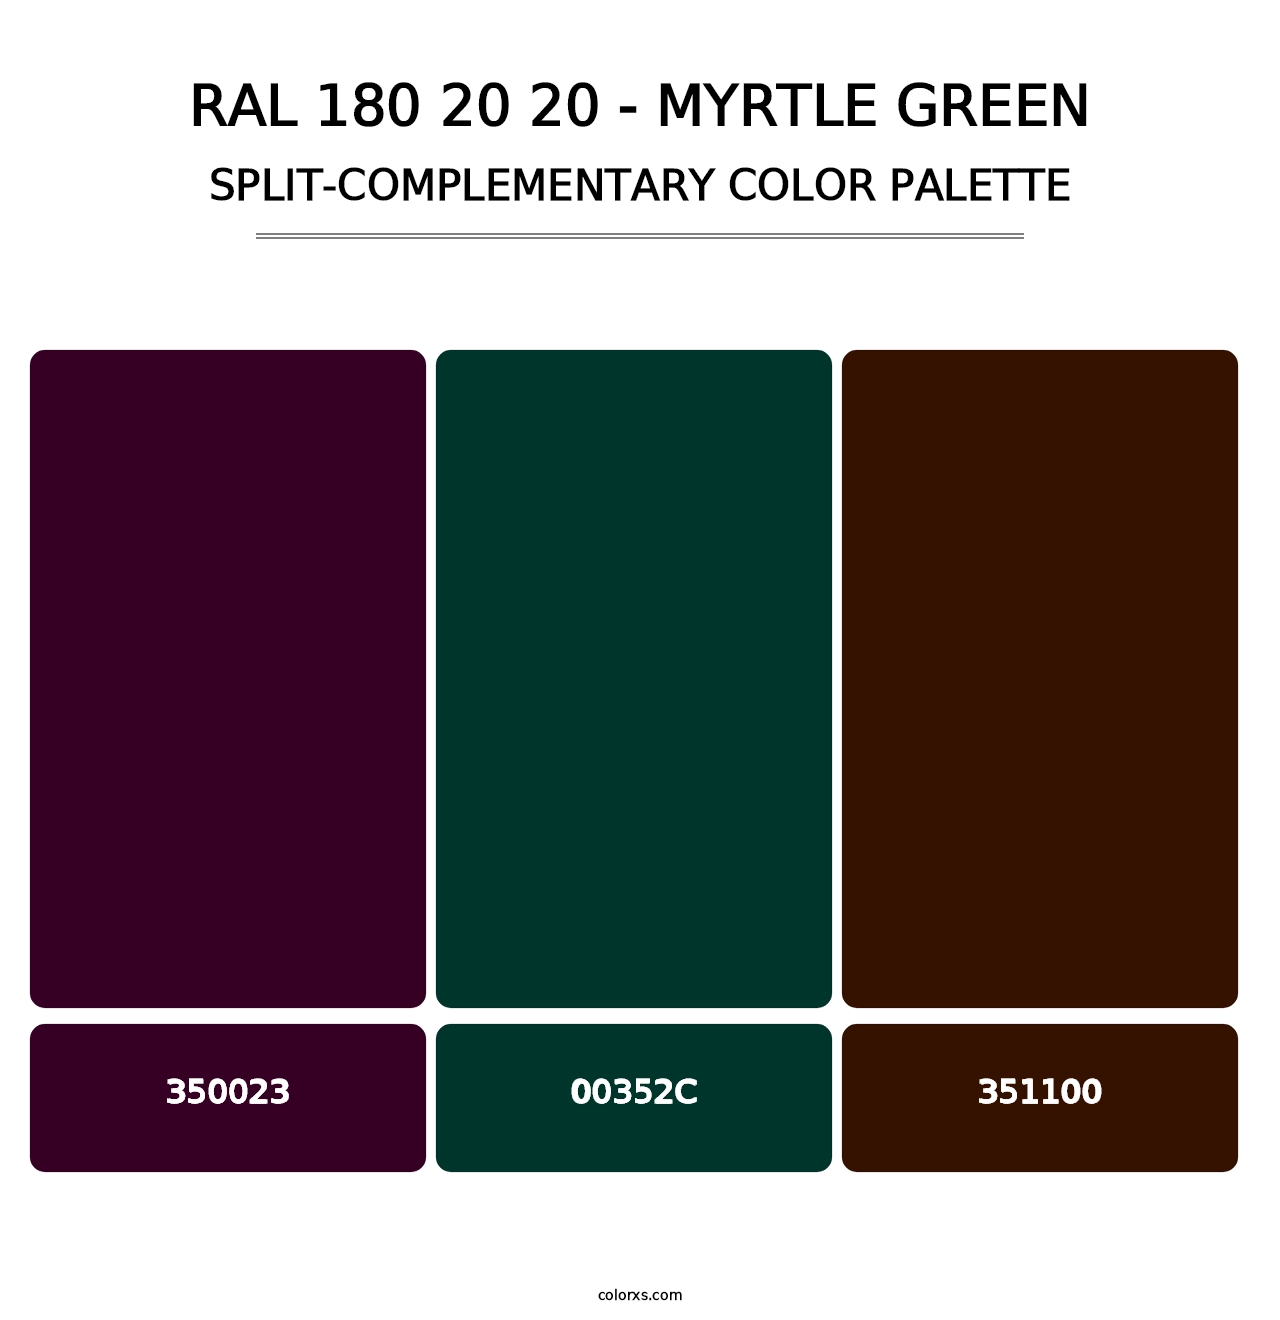 RAL 180 20 20 - Myrtle Green - Split-Complementary Color Palette